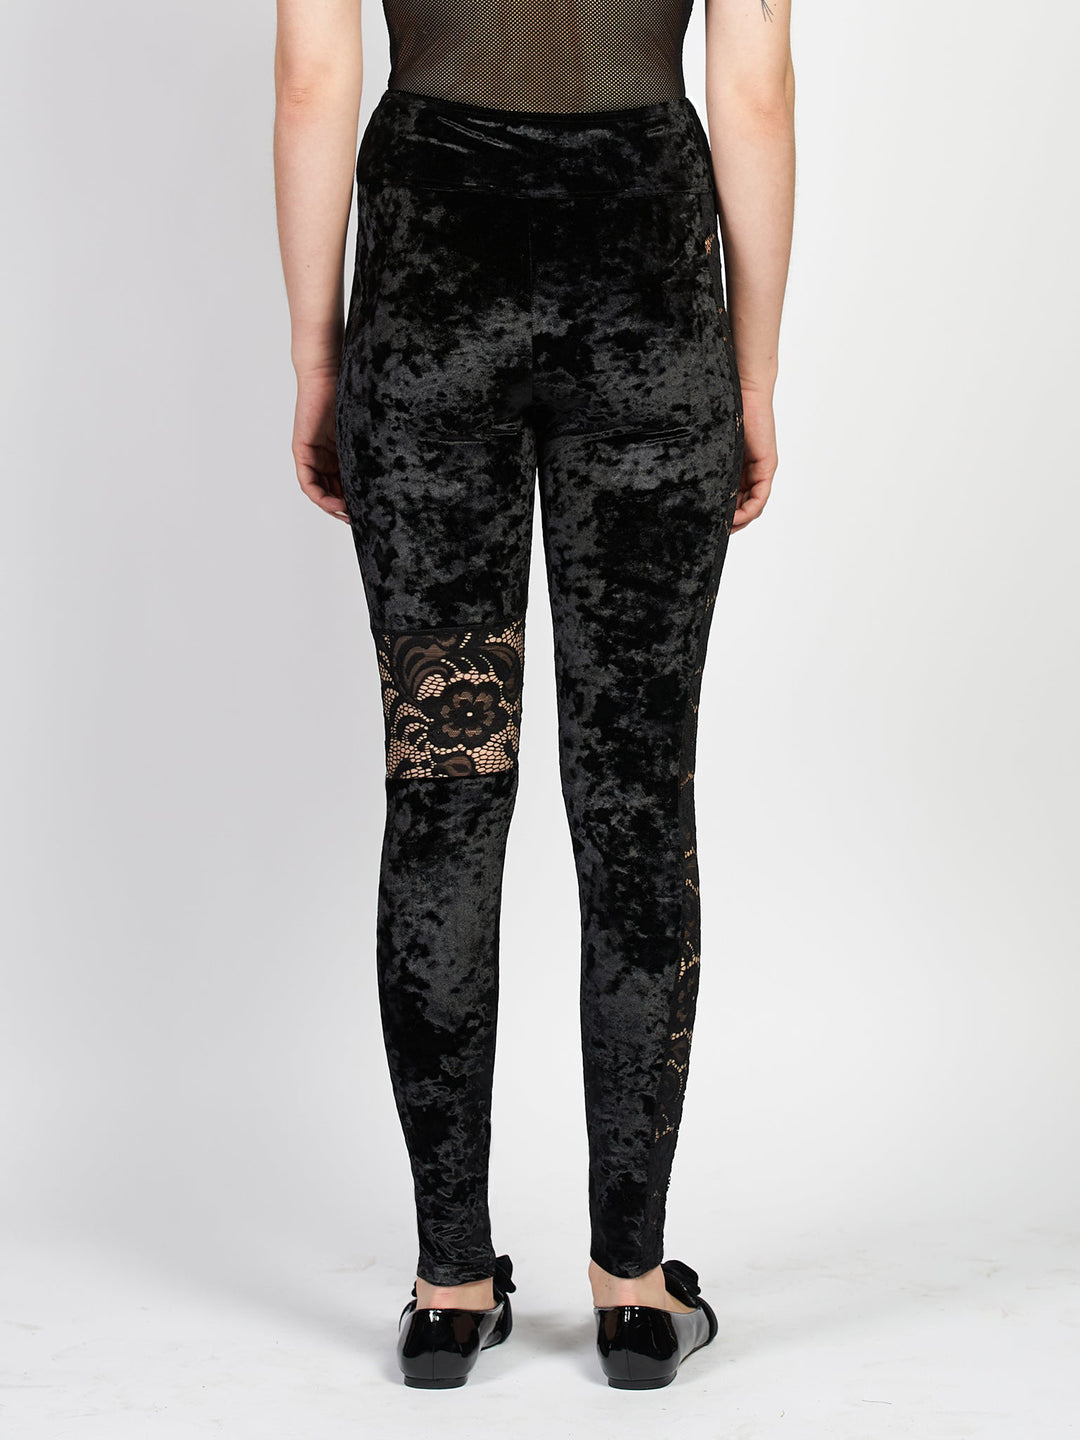 Leggings in Black Velvet and Lace – Amy Page DeBlasio